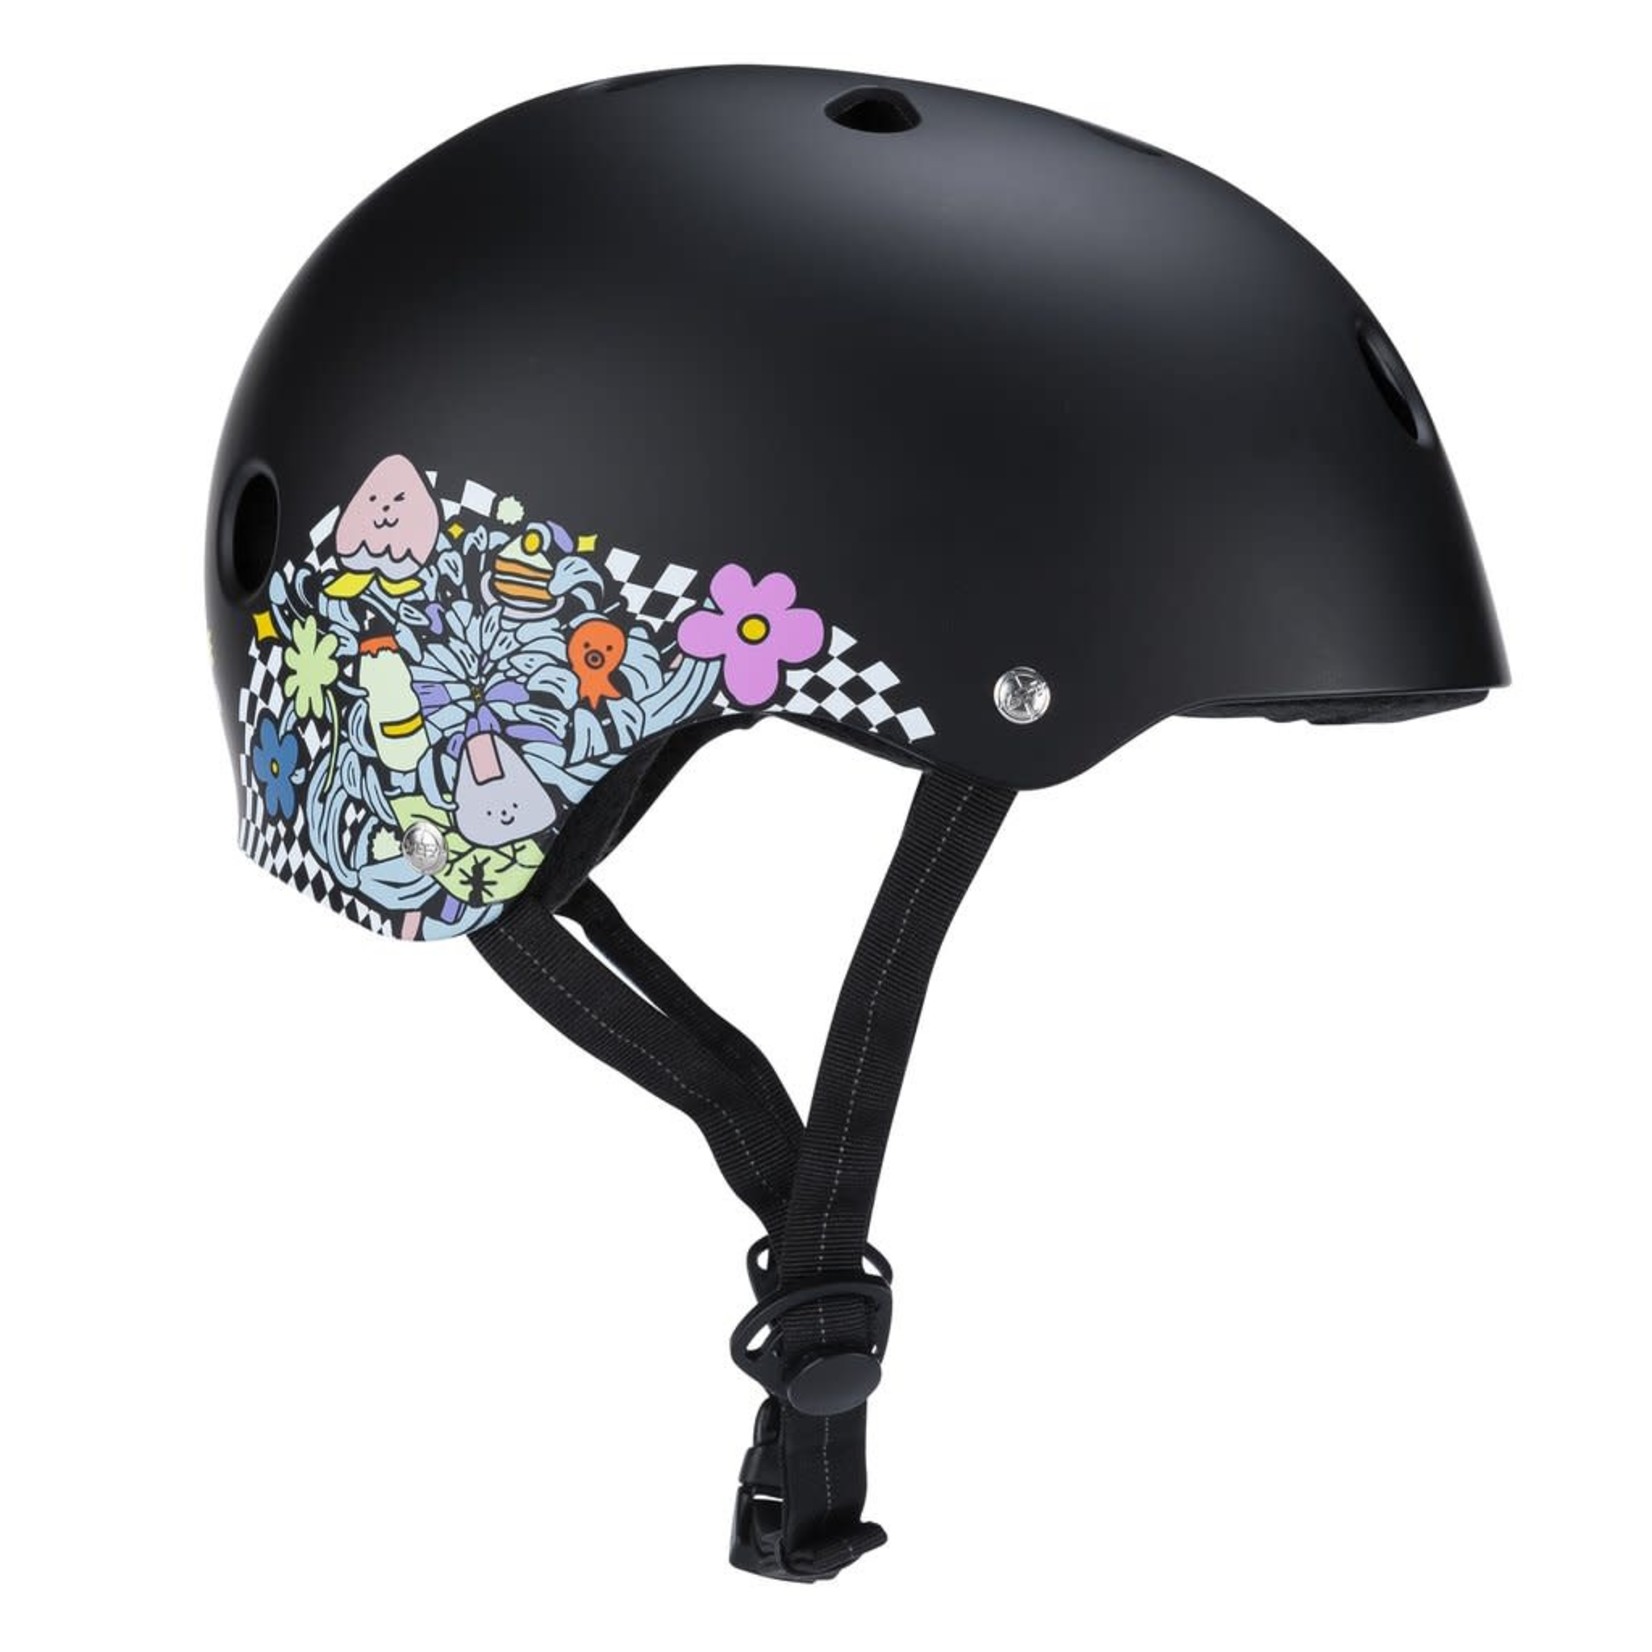 187 187 - Lizzie Armanto Helmet with Sweat Saver - Black